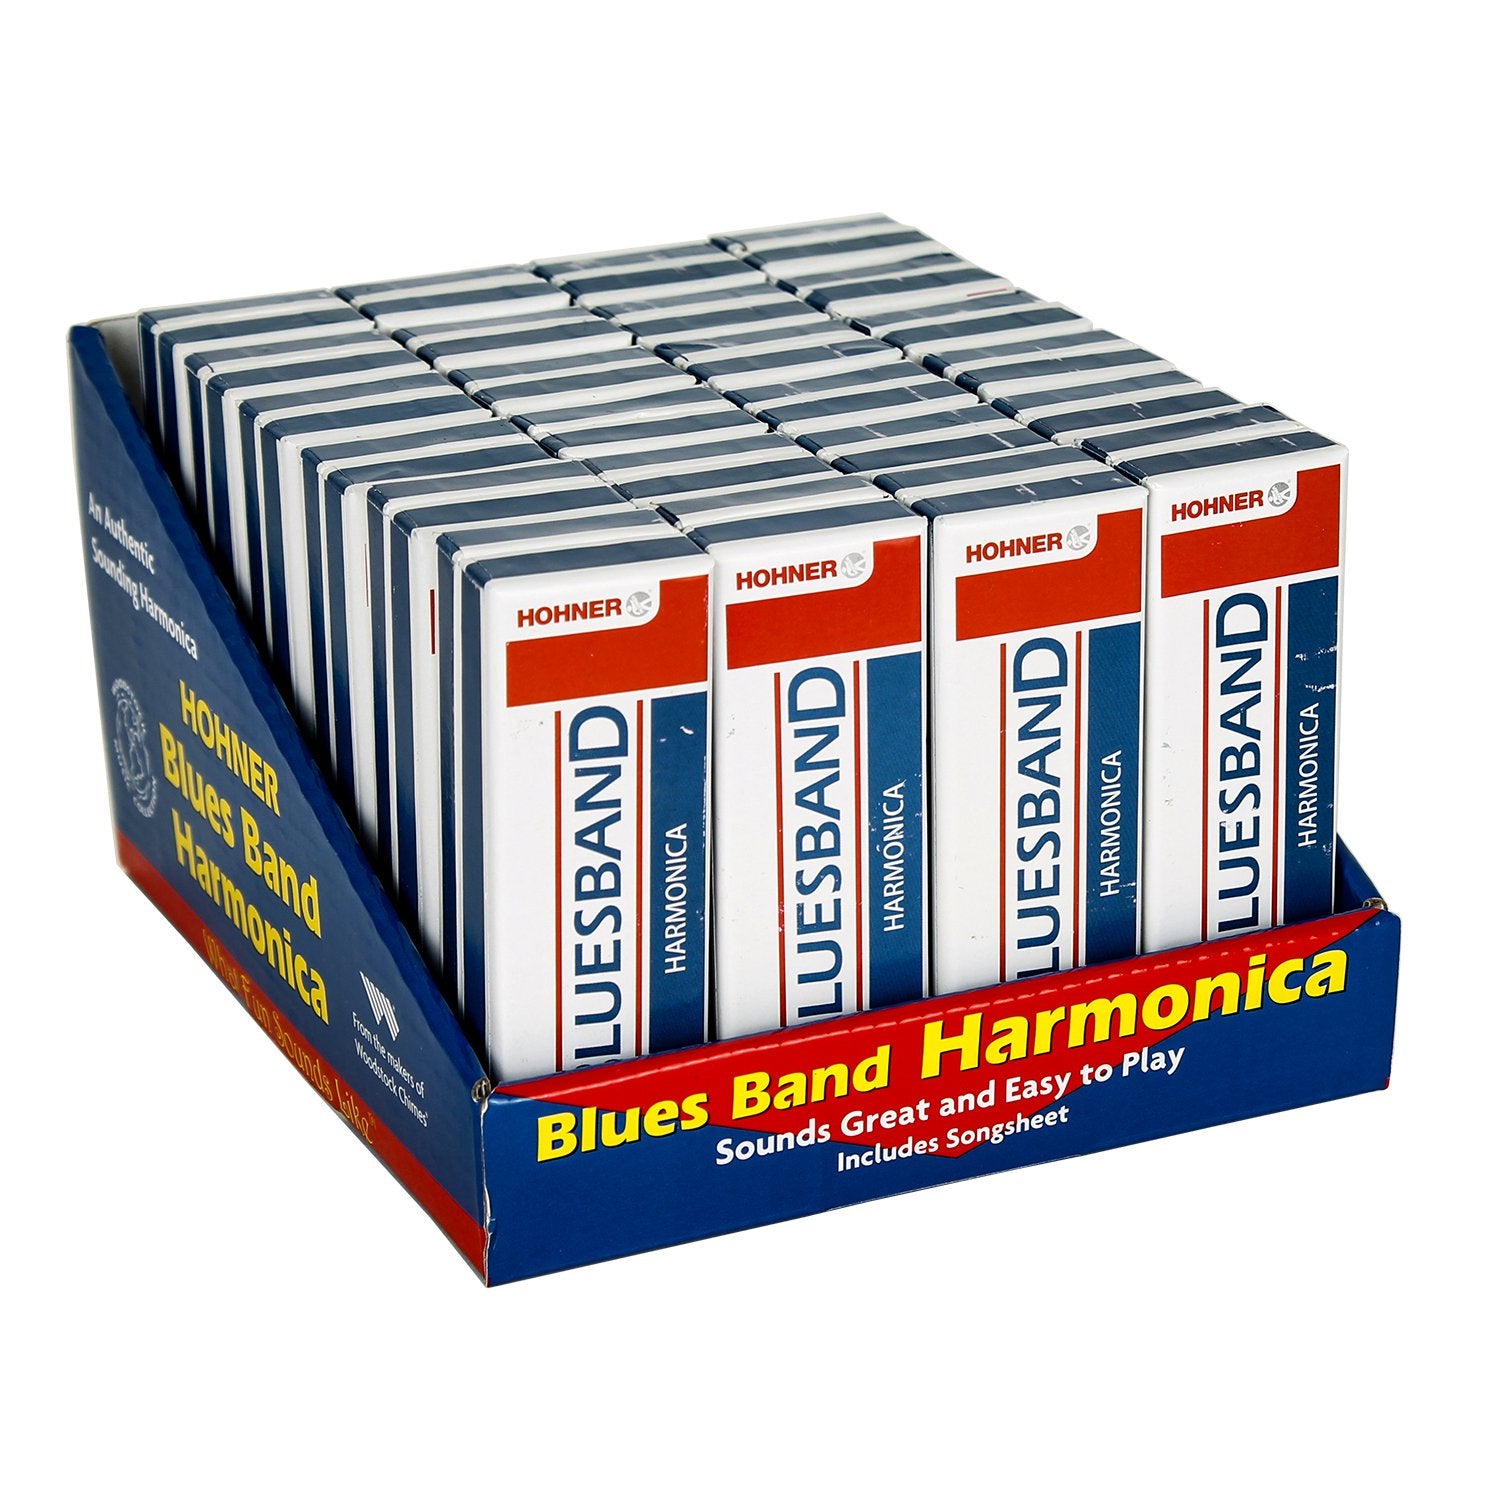 Blues Band Harmonica POP main image